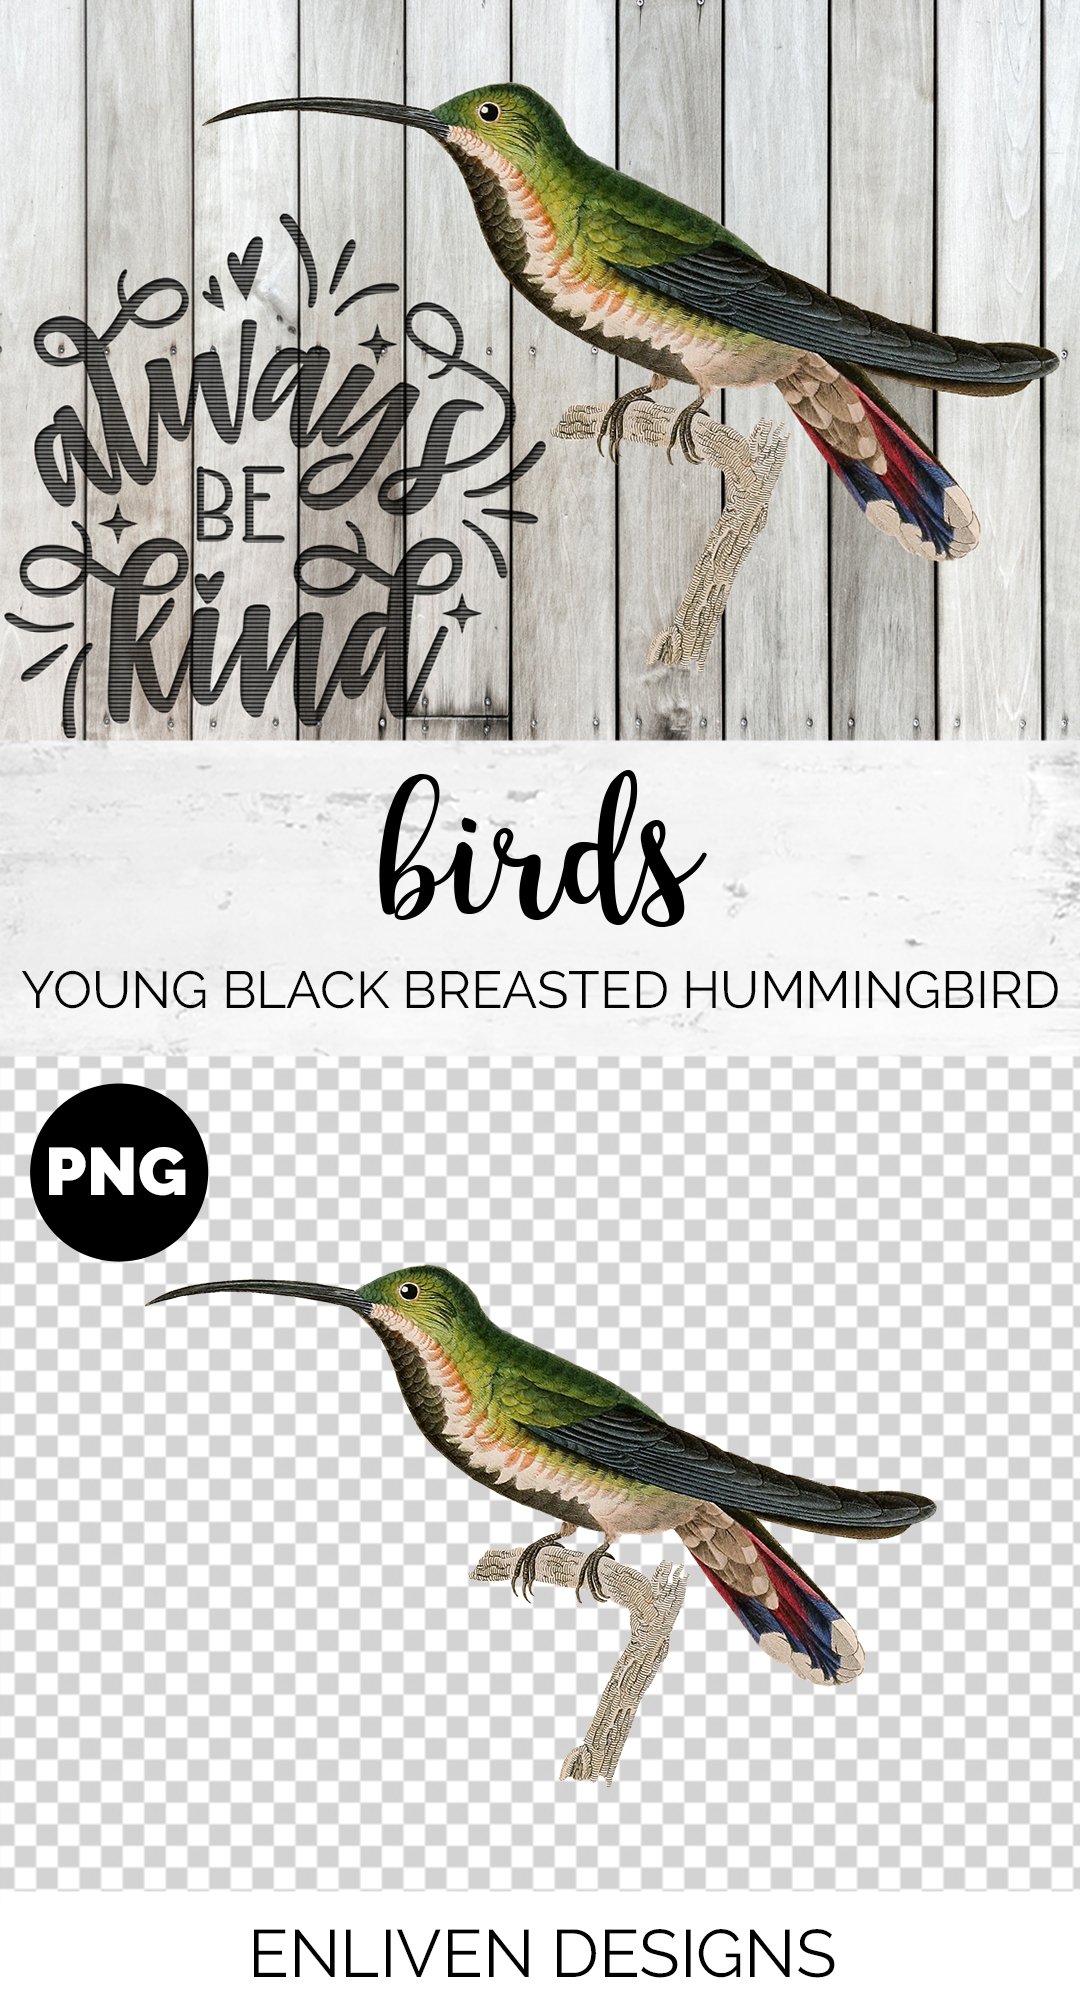 e01v01t 84561 young black breasted hummingbird b 628